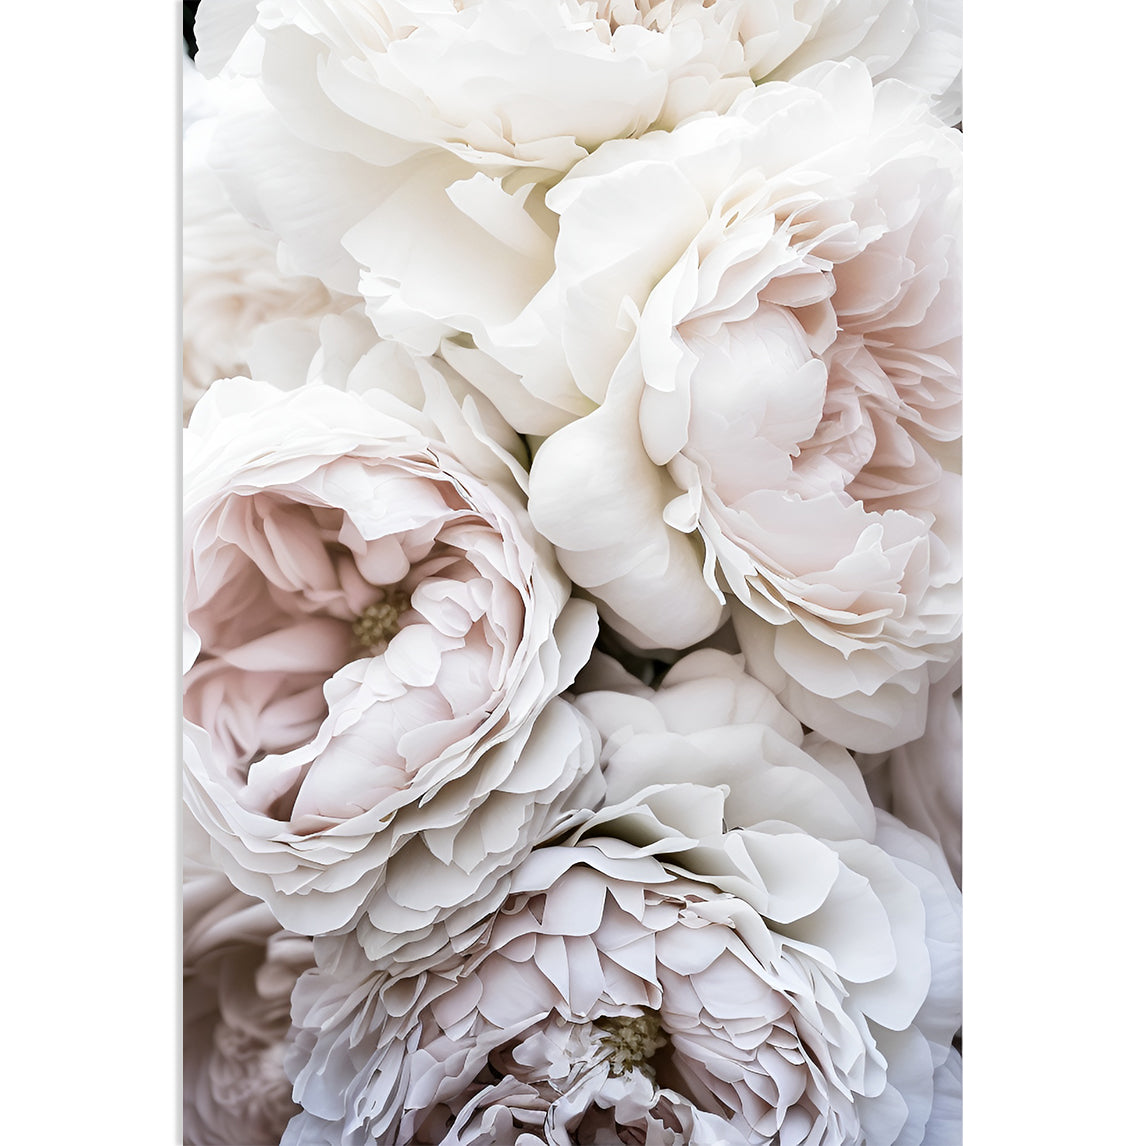 ROSES - Weiße Rosen